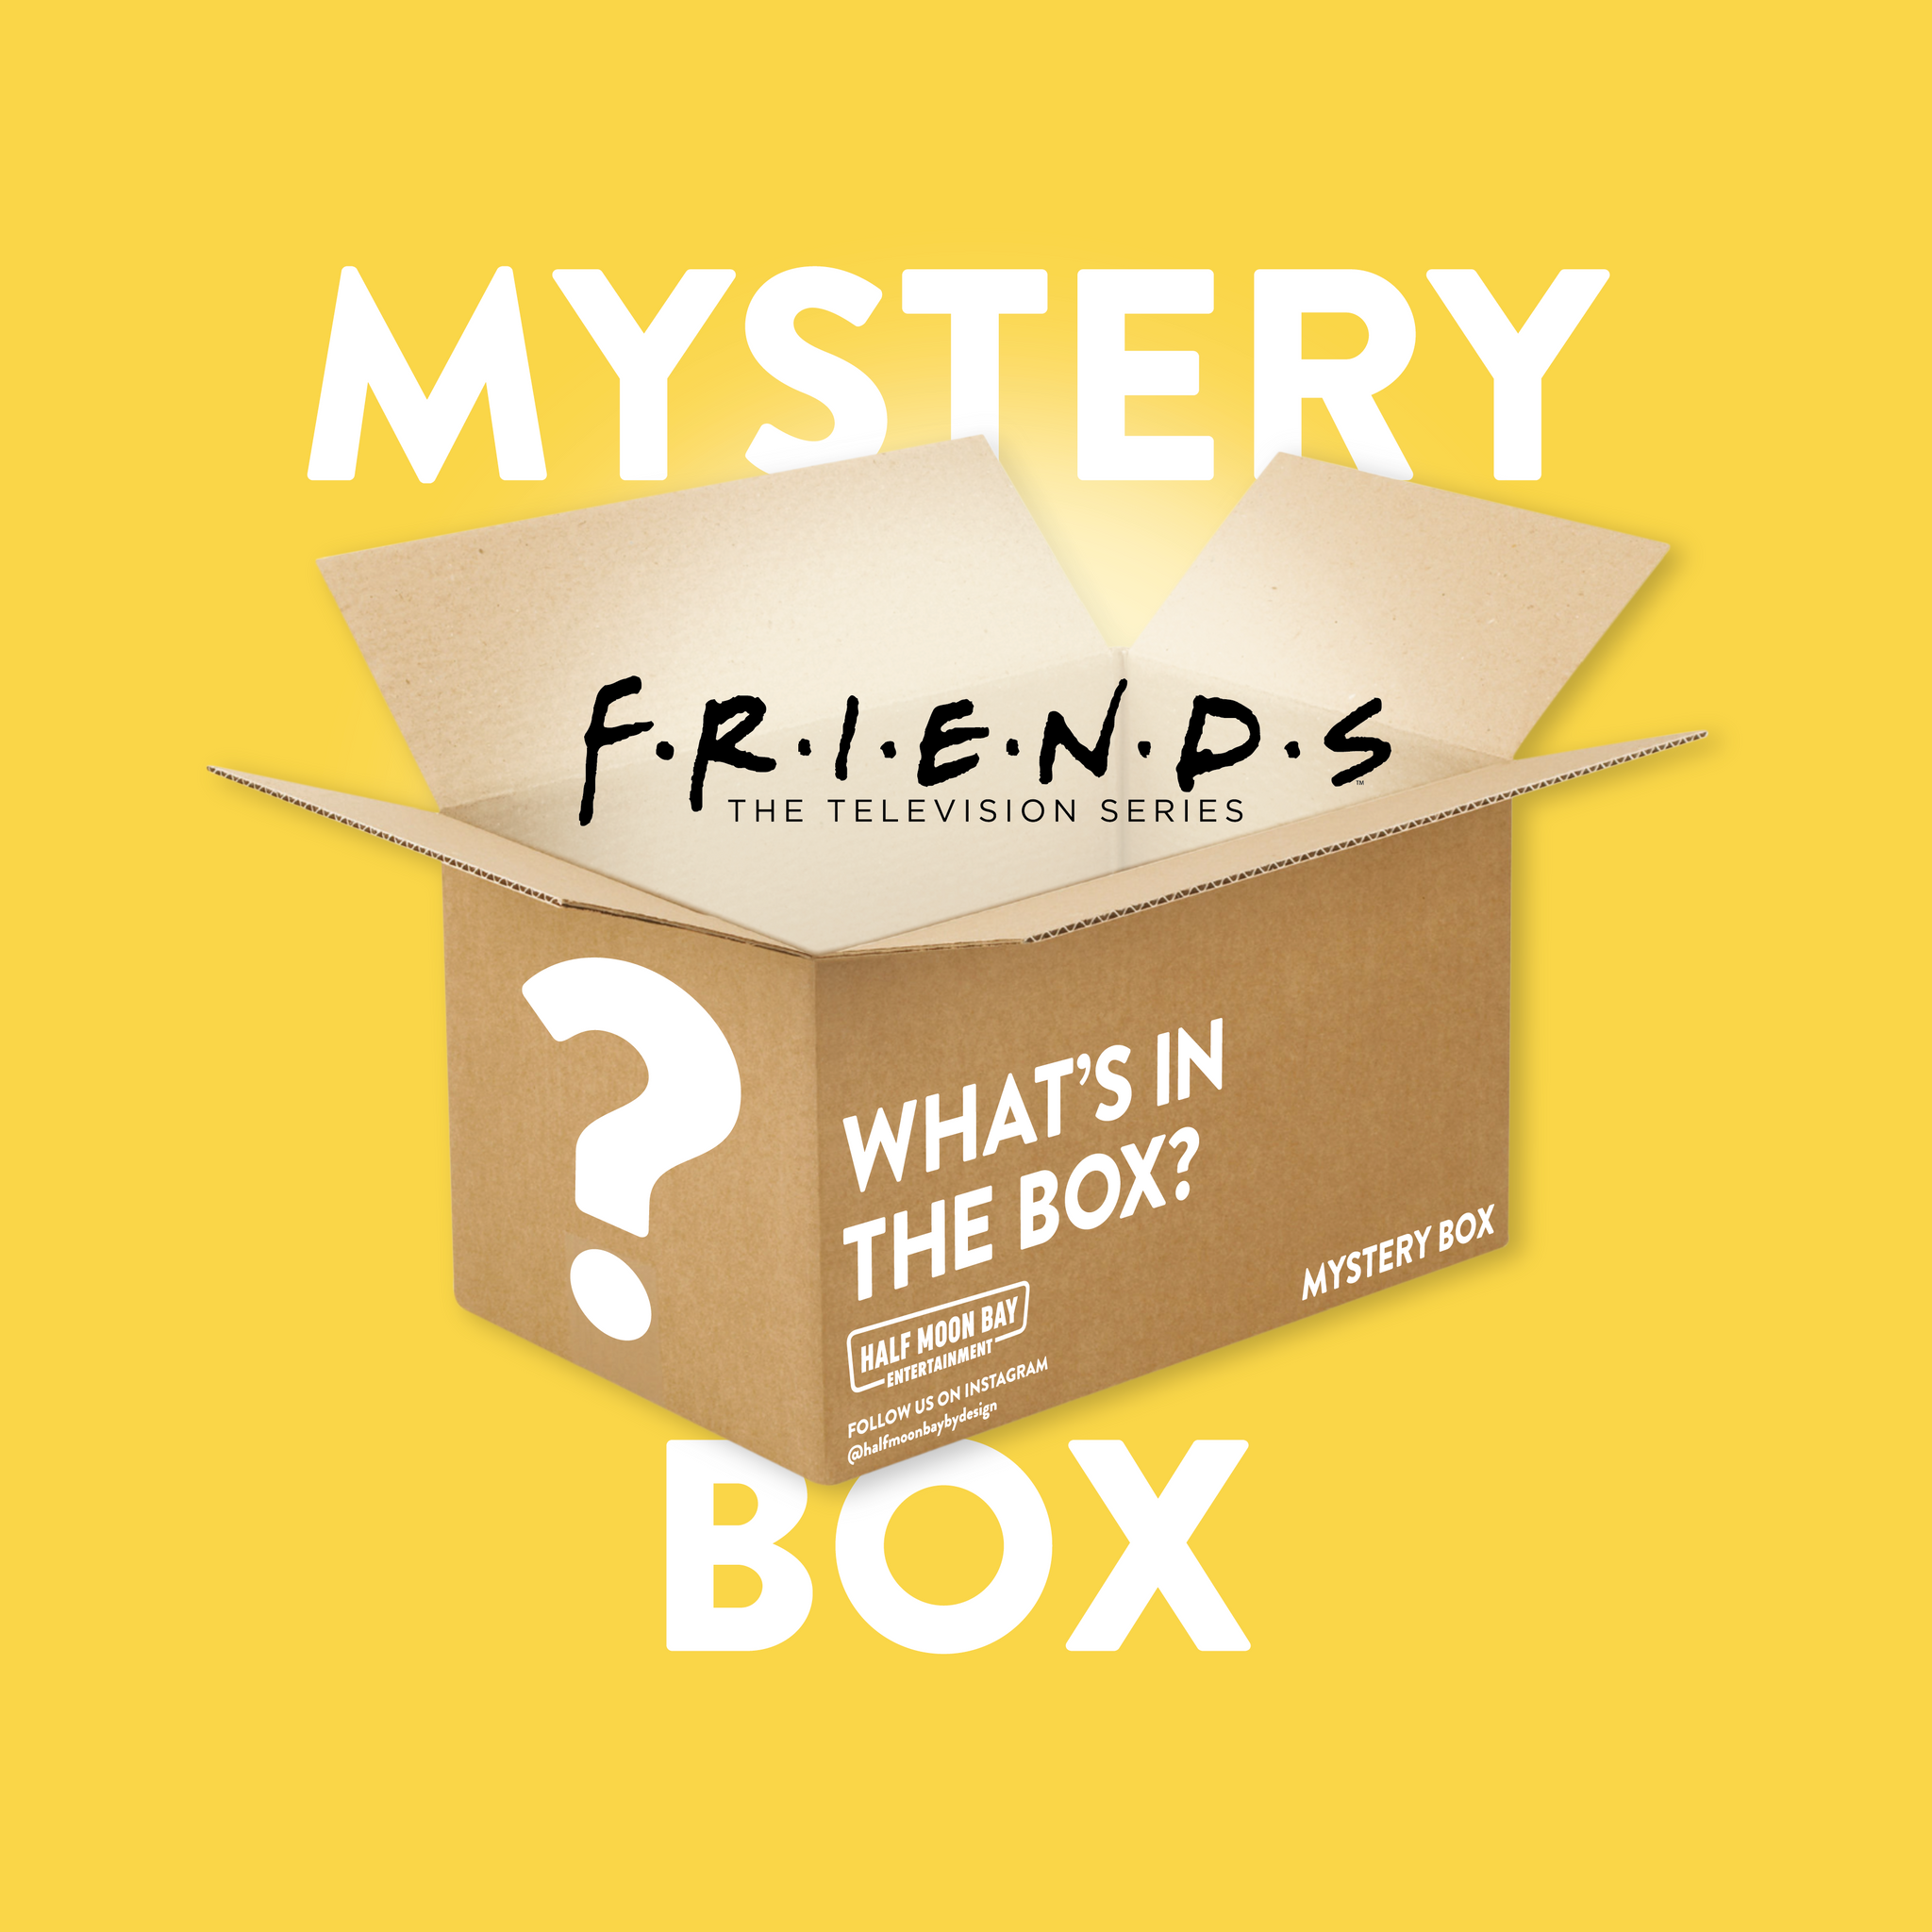 Mystery Box - Friends